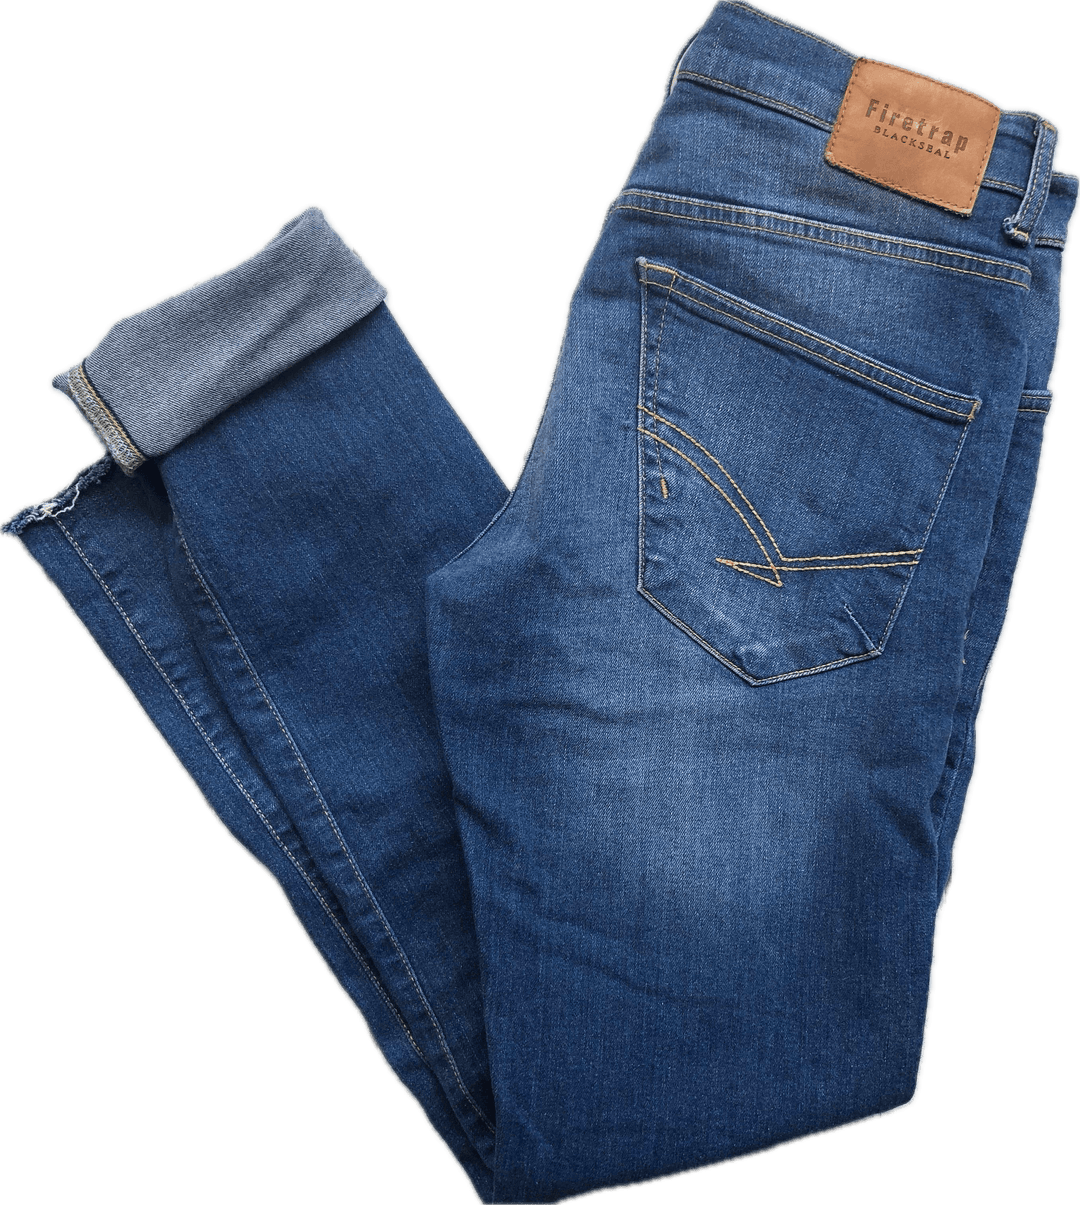 Firetrap Mens Denhoff Skinny Jeans - Size 30 - Jean Pool